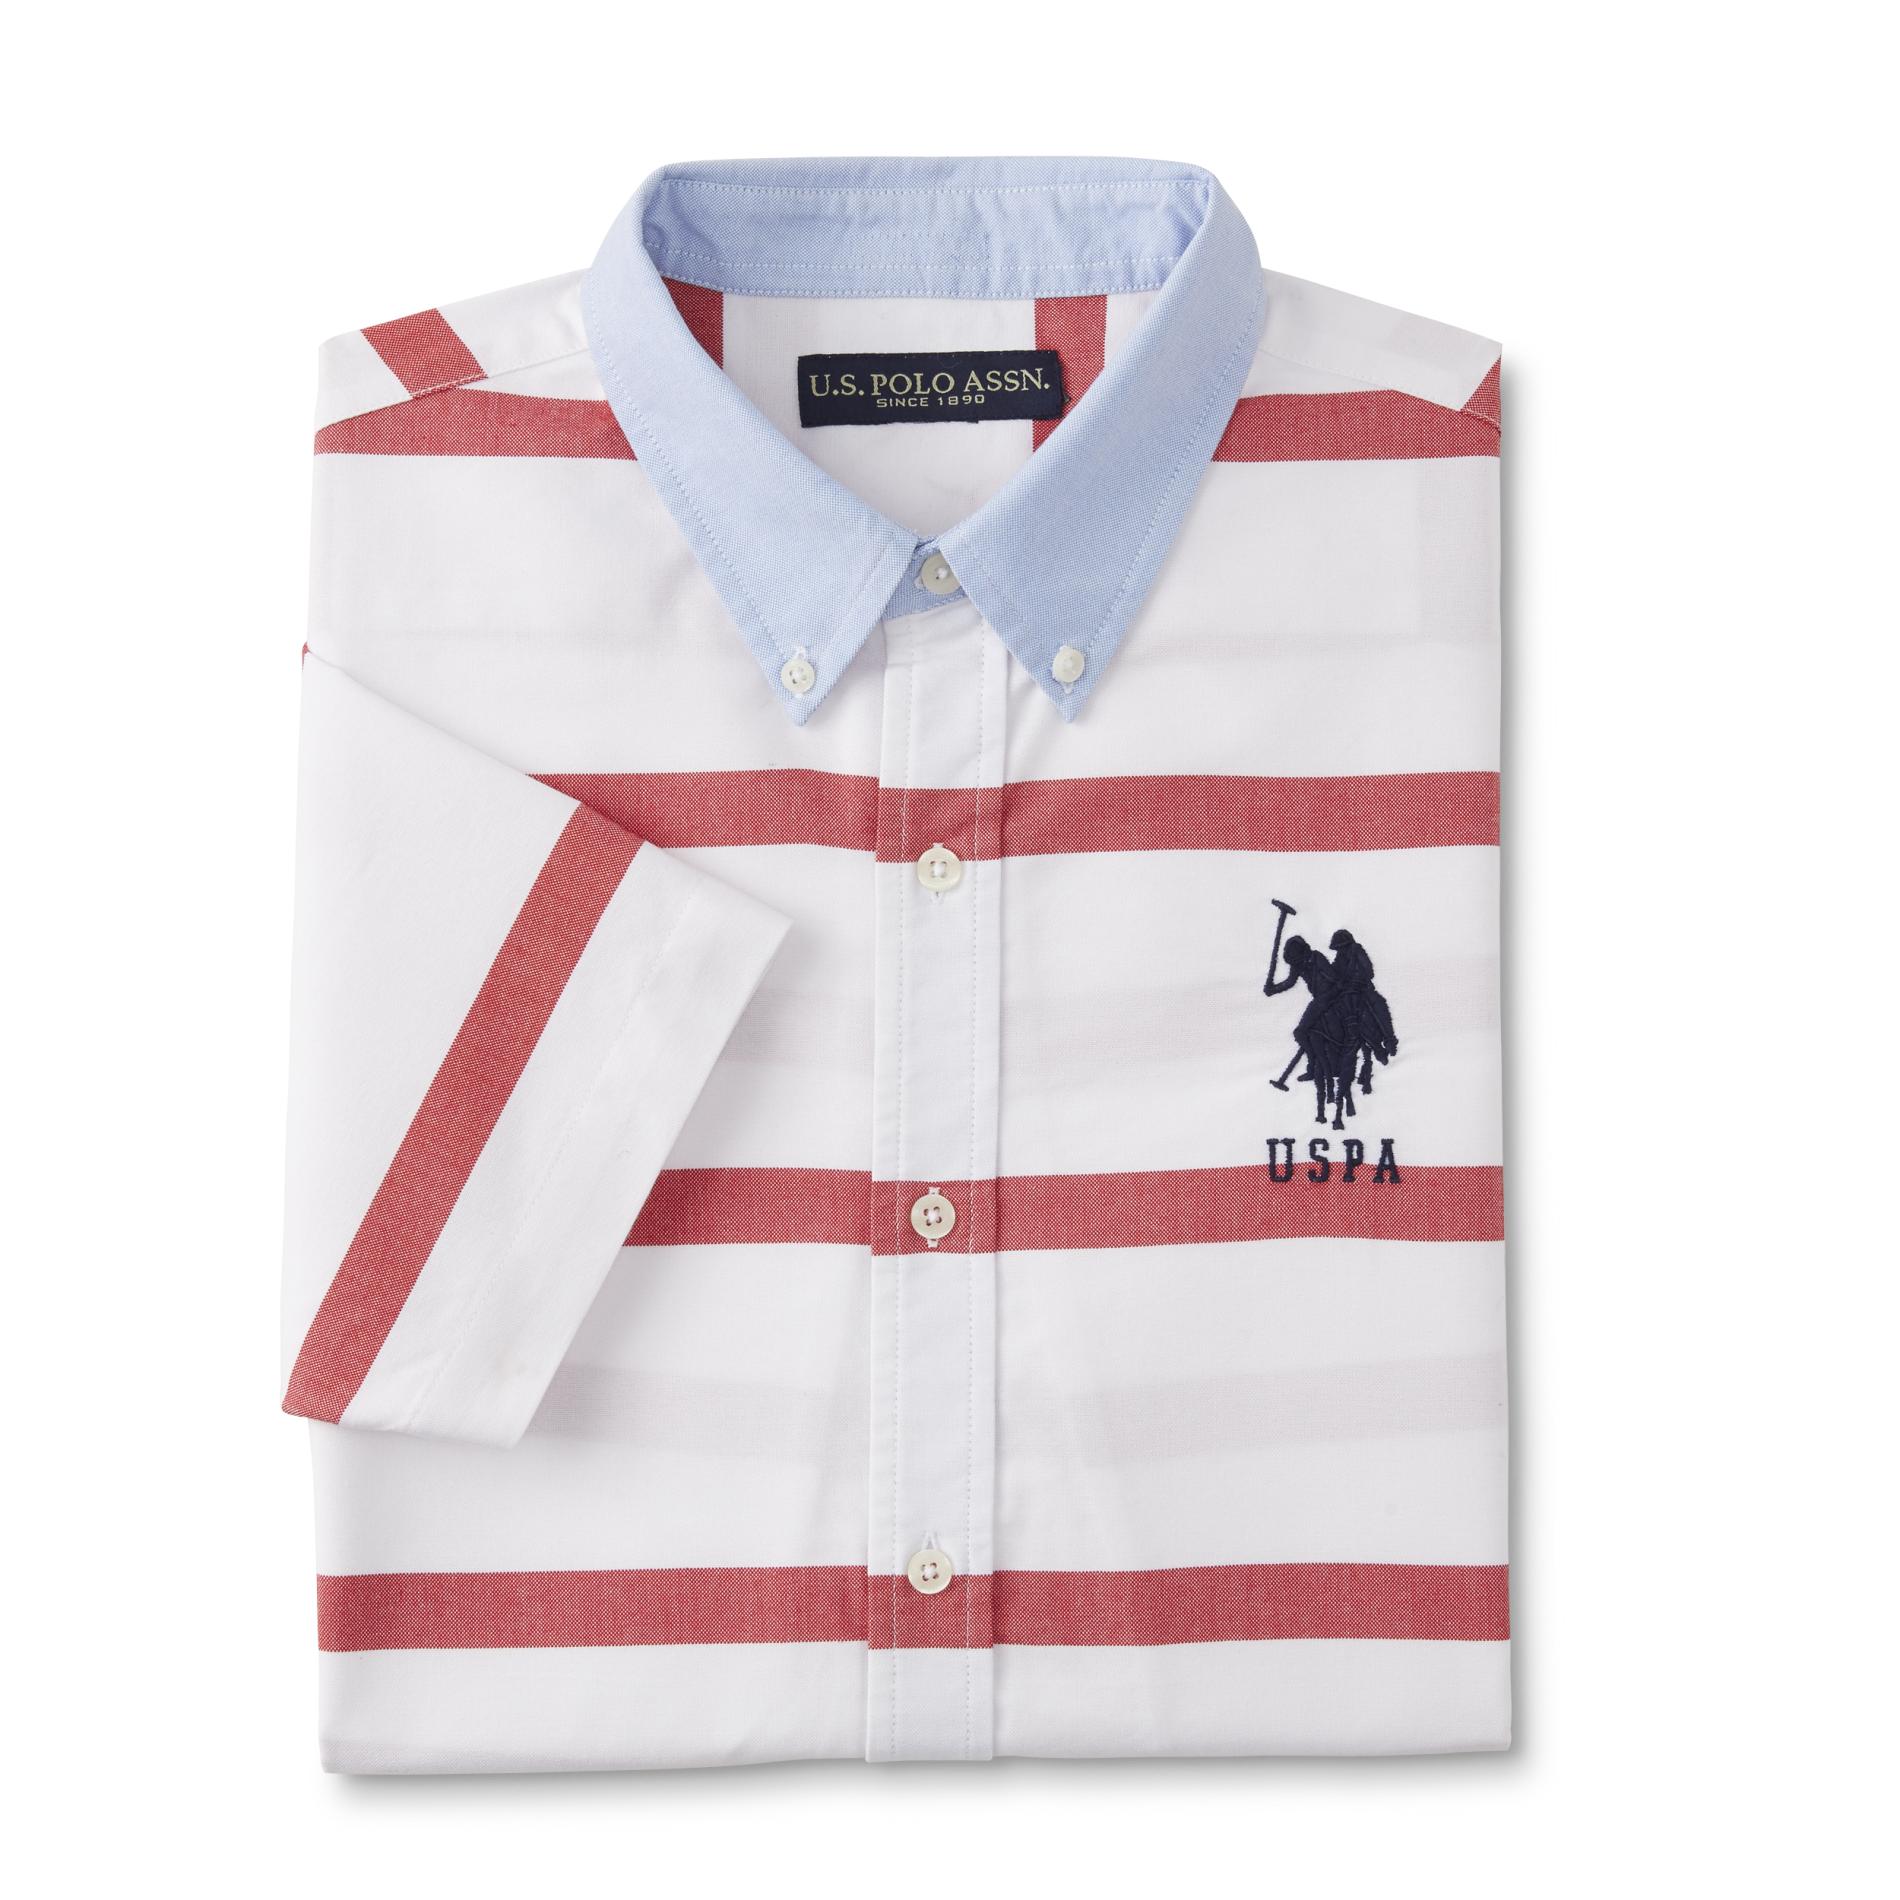 U.S. Polo Assn. Men's Slim Fit Sport Shirt - Striped